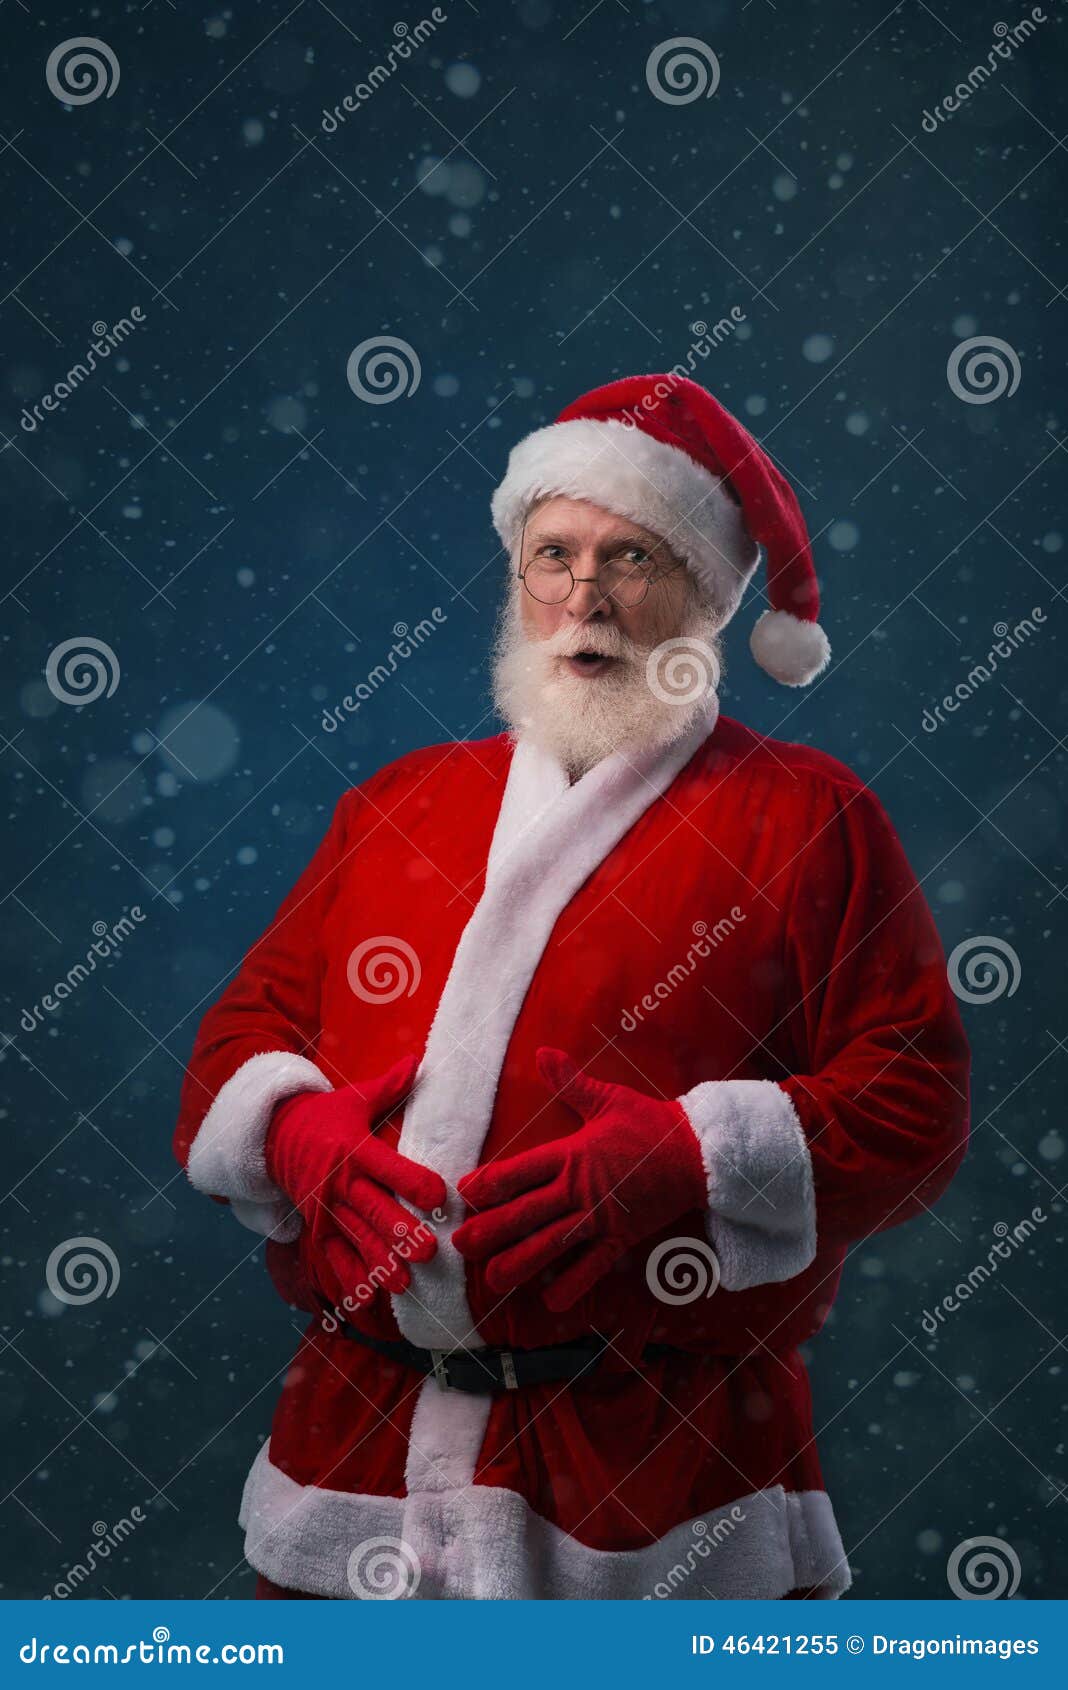 Fat Santa stock image. Image of beard, festive, celebration - 46421255